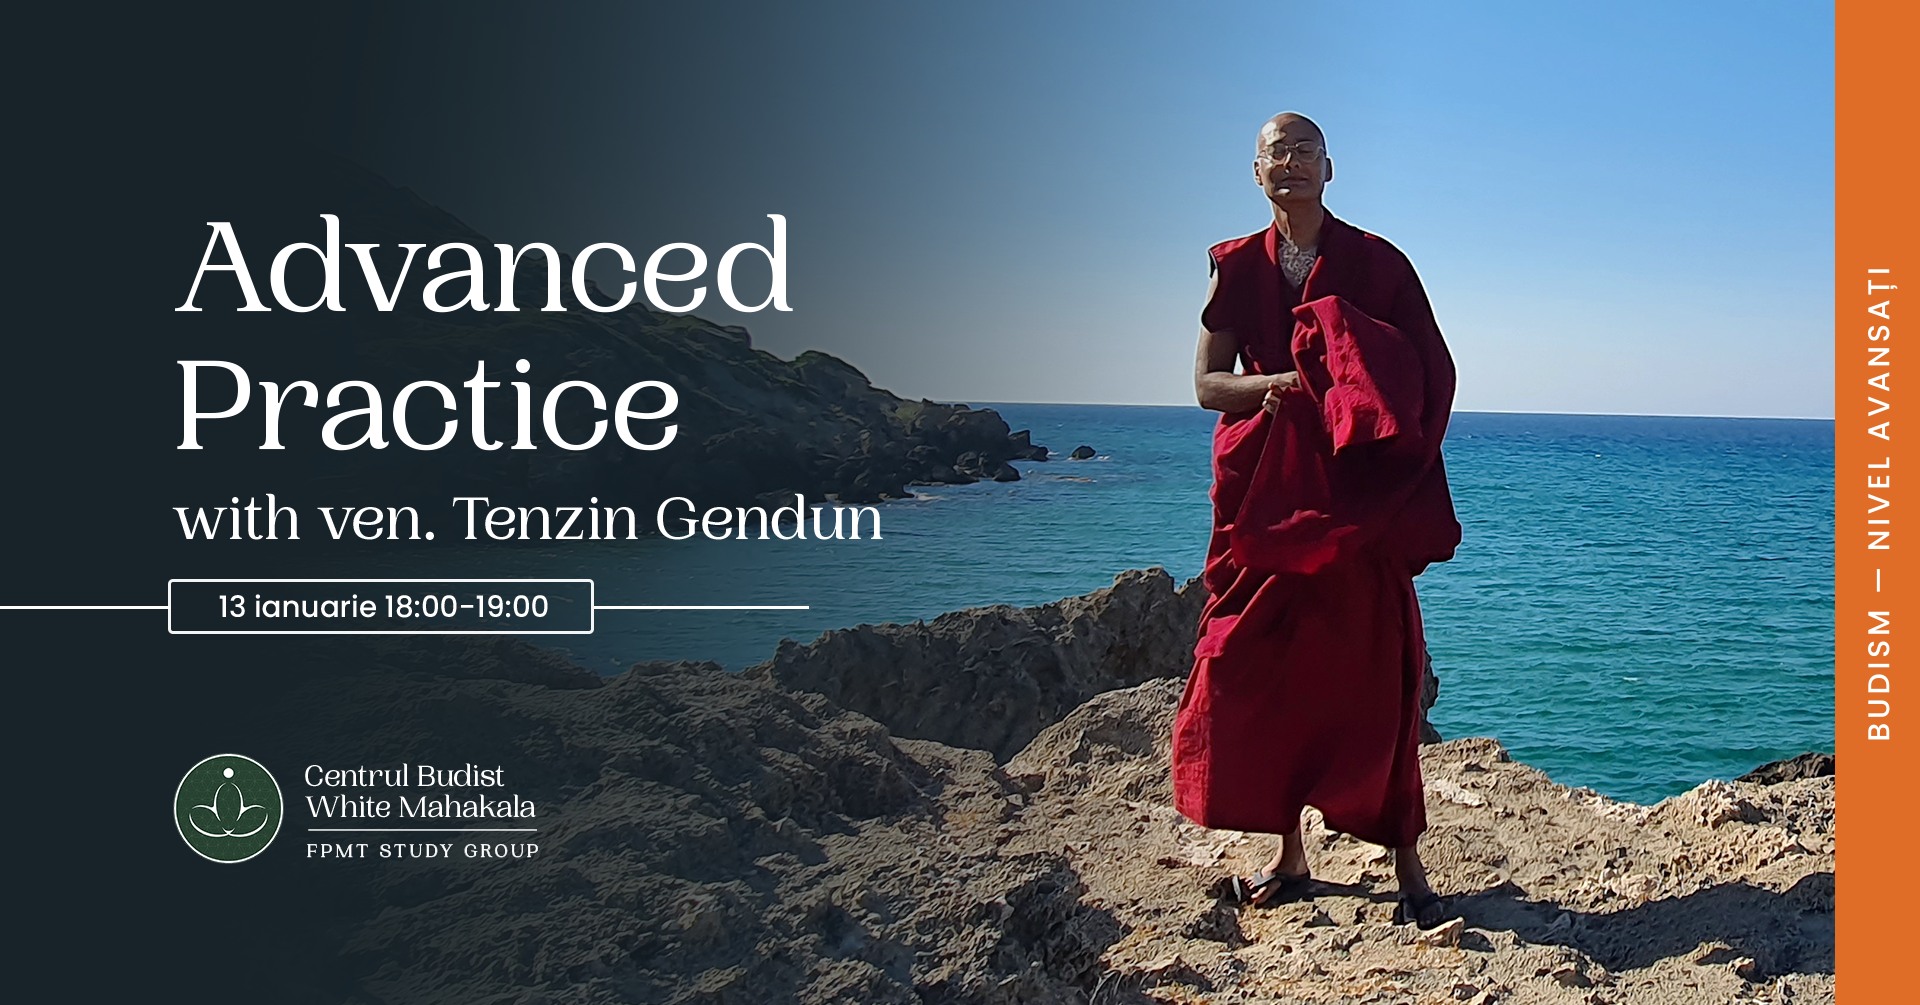 Buddhism: advanced practice with ven. Tenzin Gendun